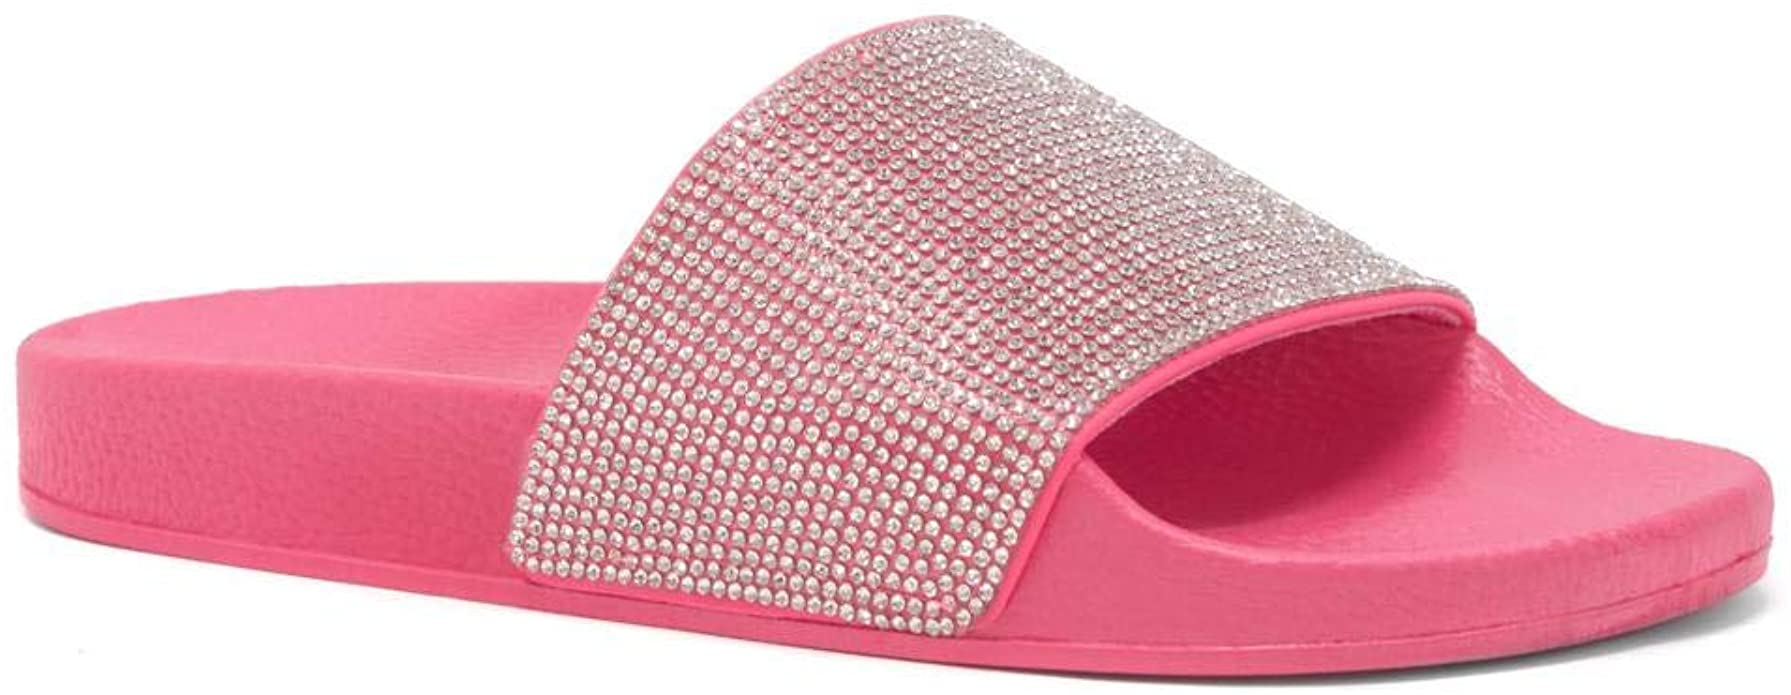 Herstyle Cosmic Womens Fashion Rhinestone Glitter Slide Slip On Mules Summer Shoe Platform Footbed Sandal Slippers